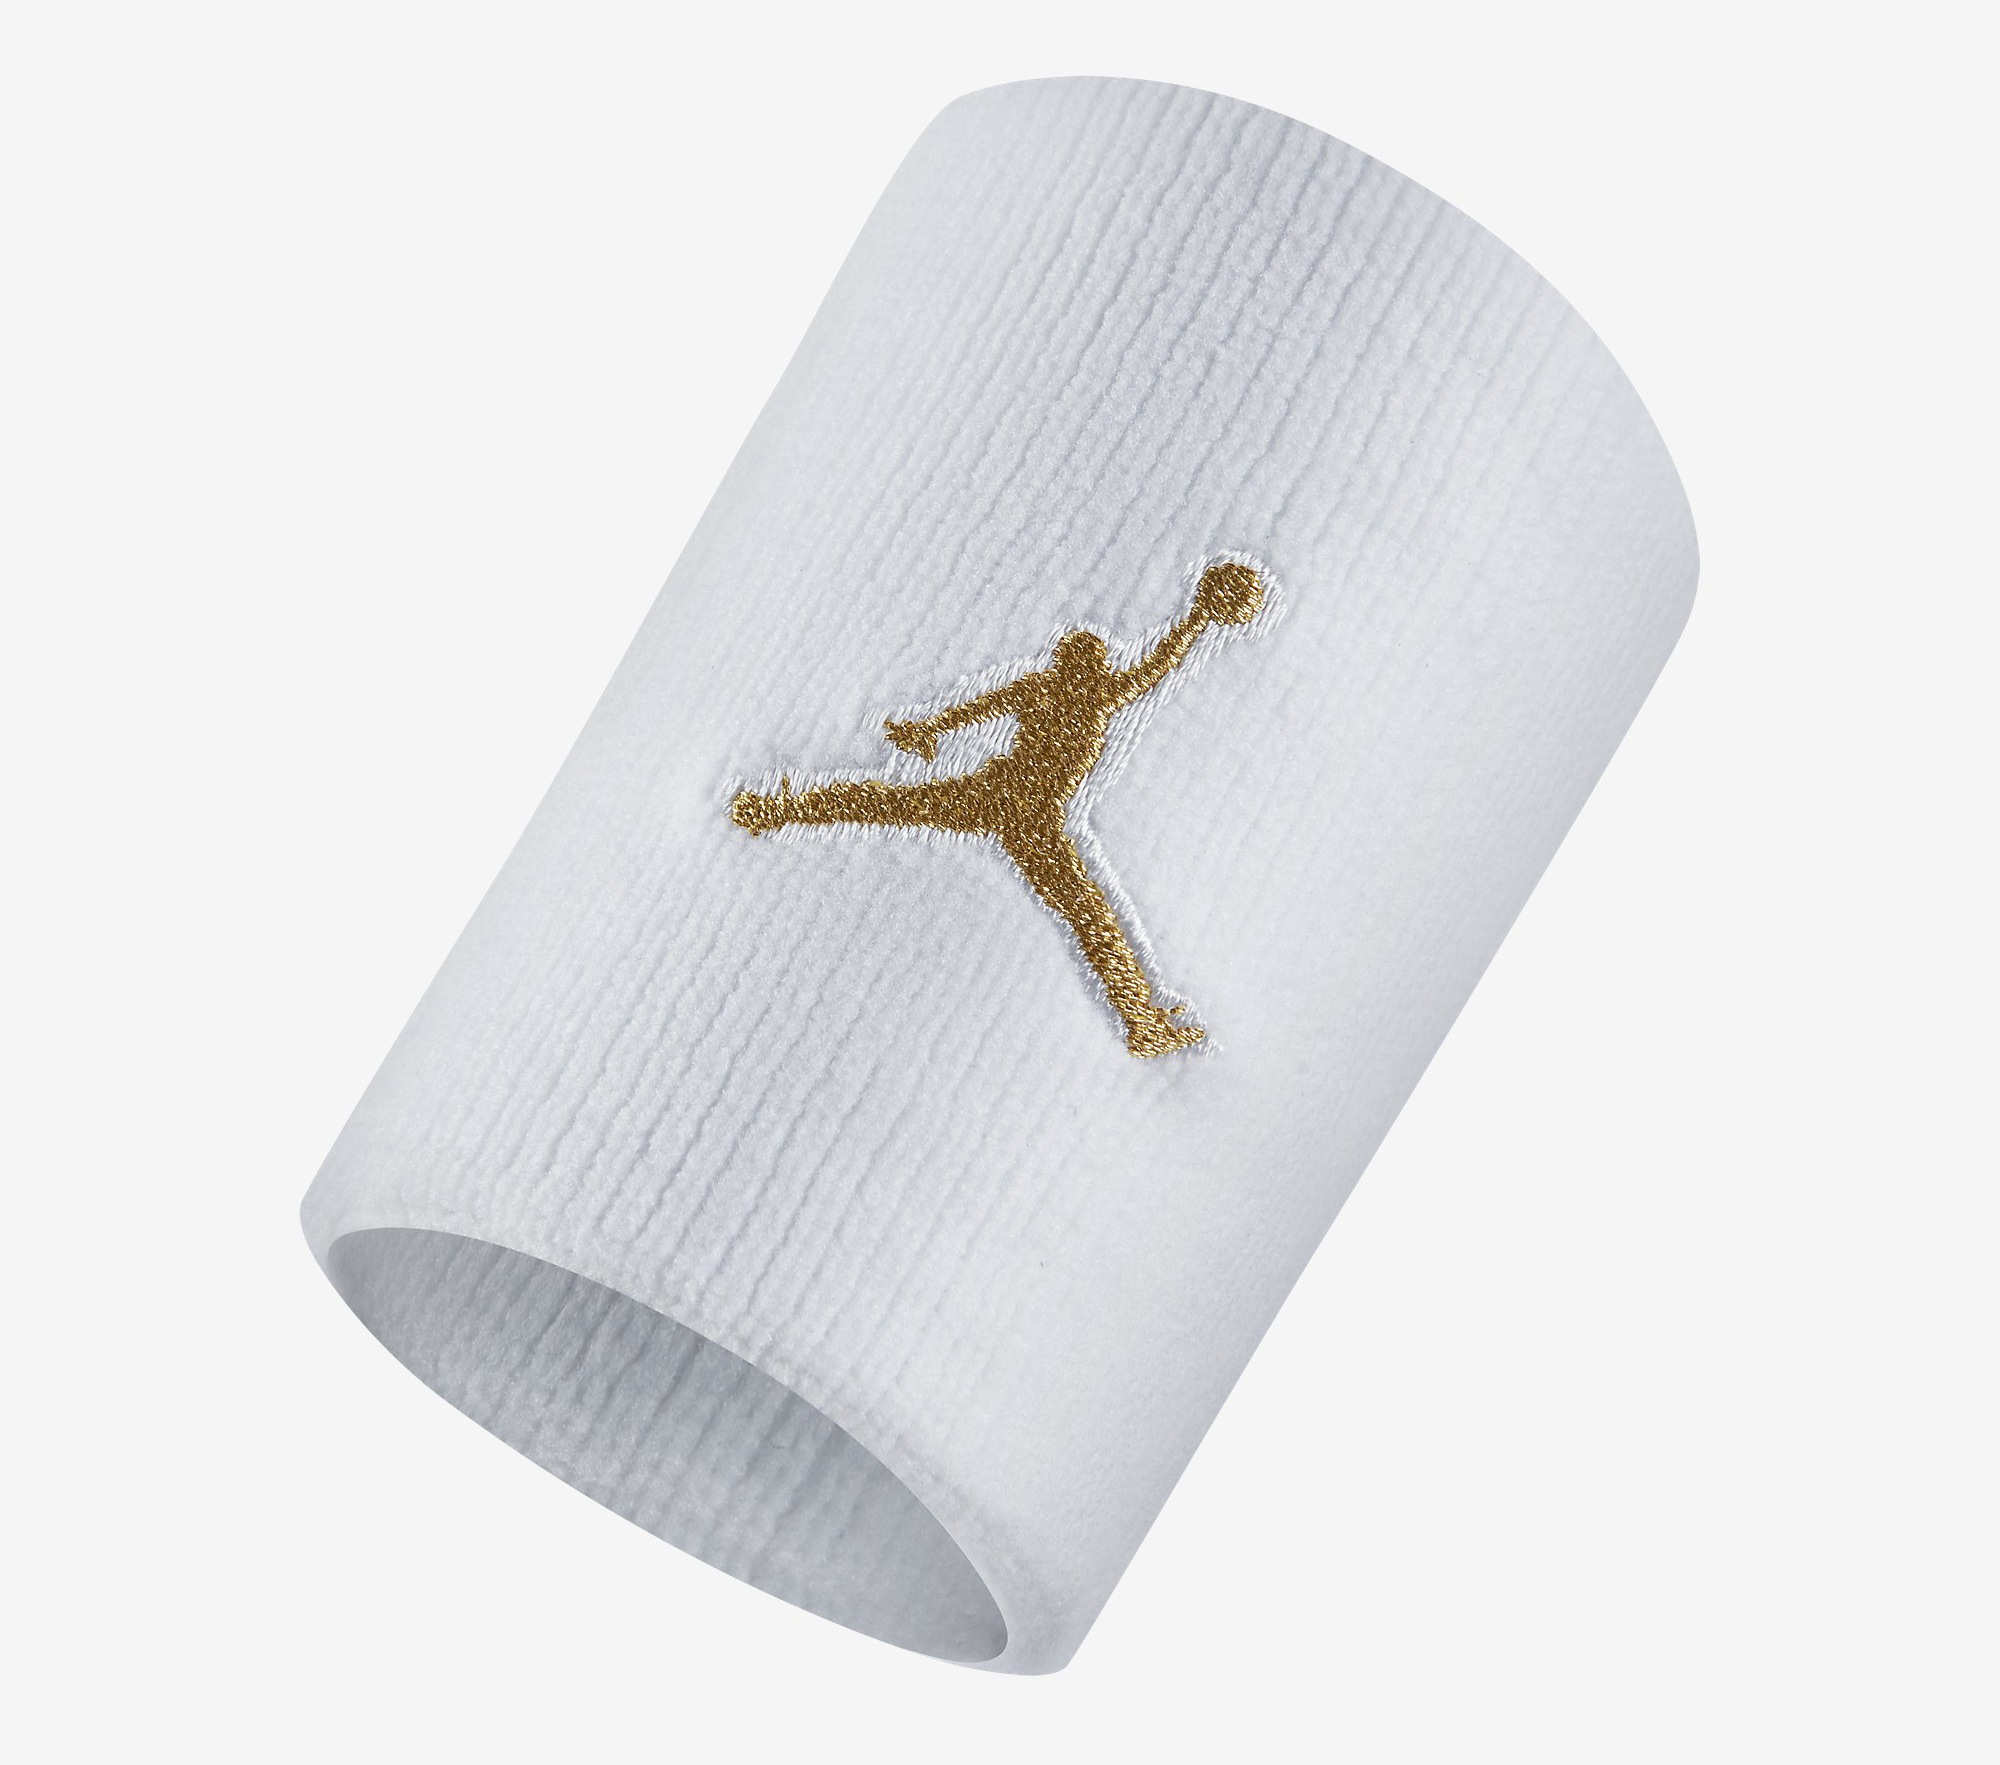 Drake OVO Air Jordan Wristband